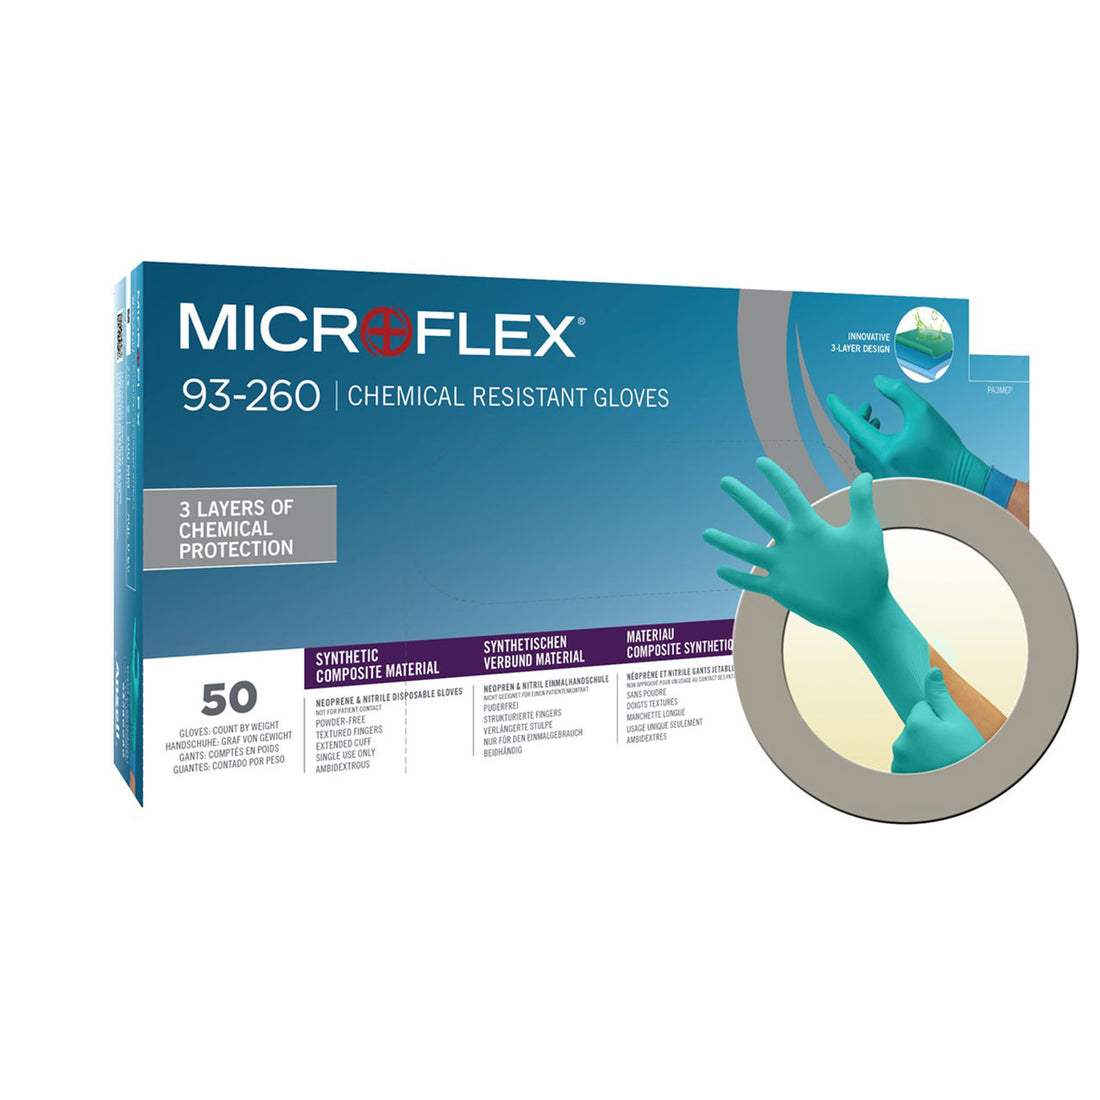 MICROFLEX® 93